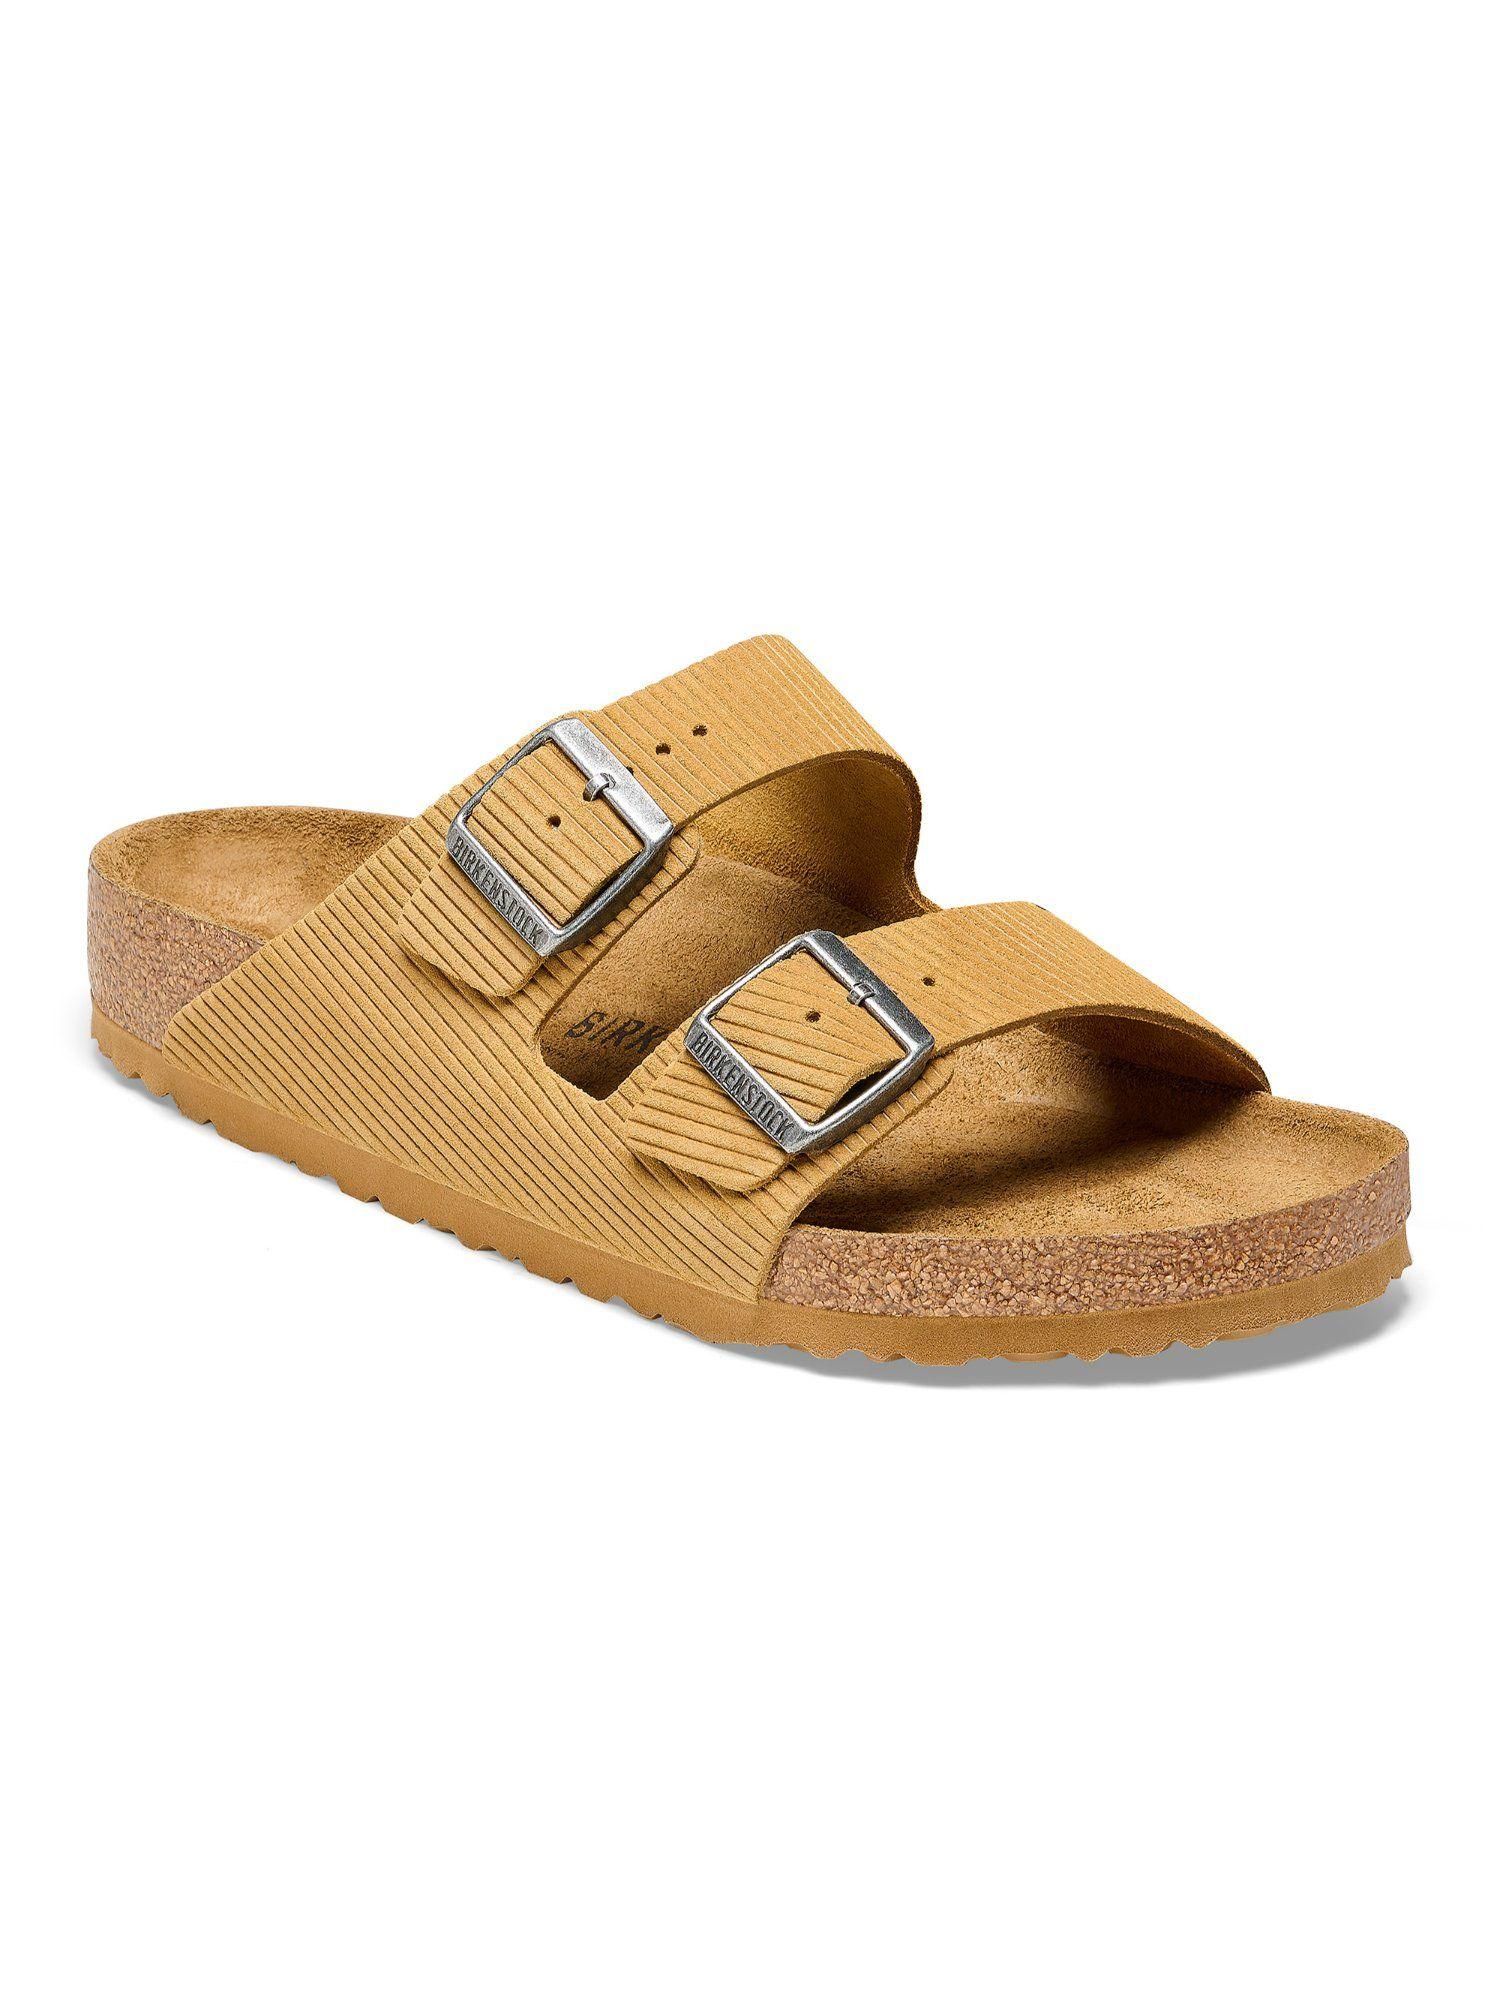 arizona tan suede embossed narrow width unisex two strap sandals